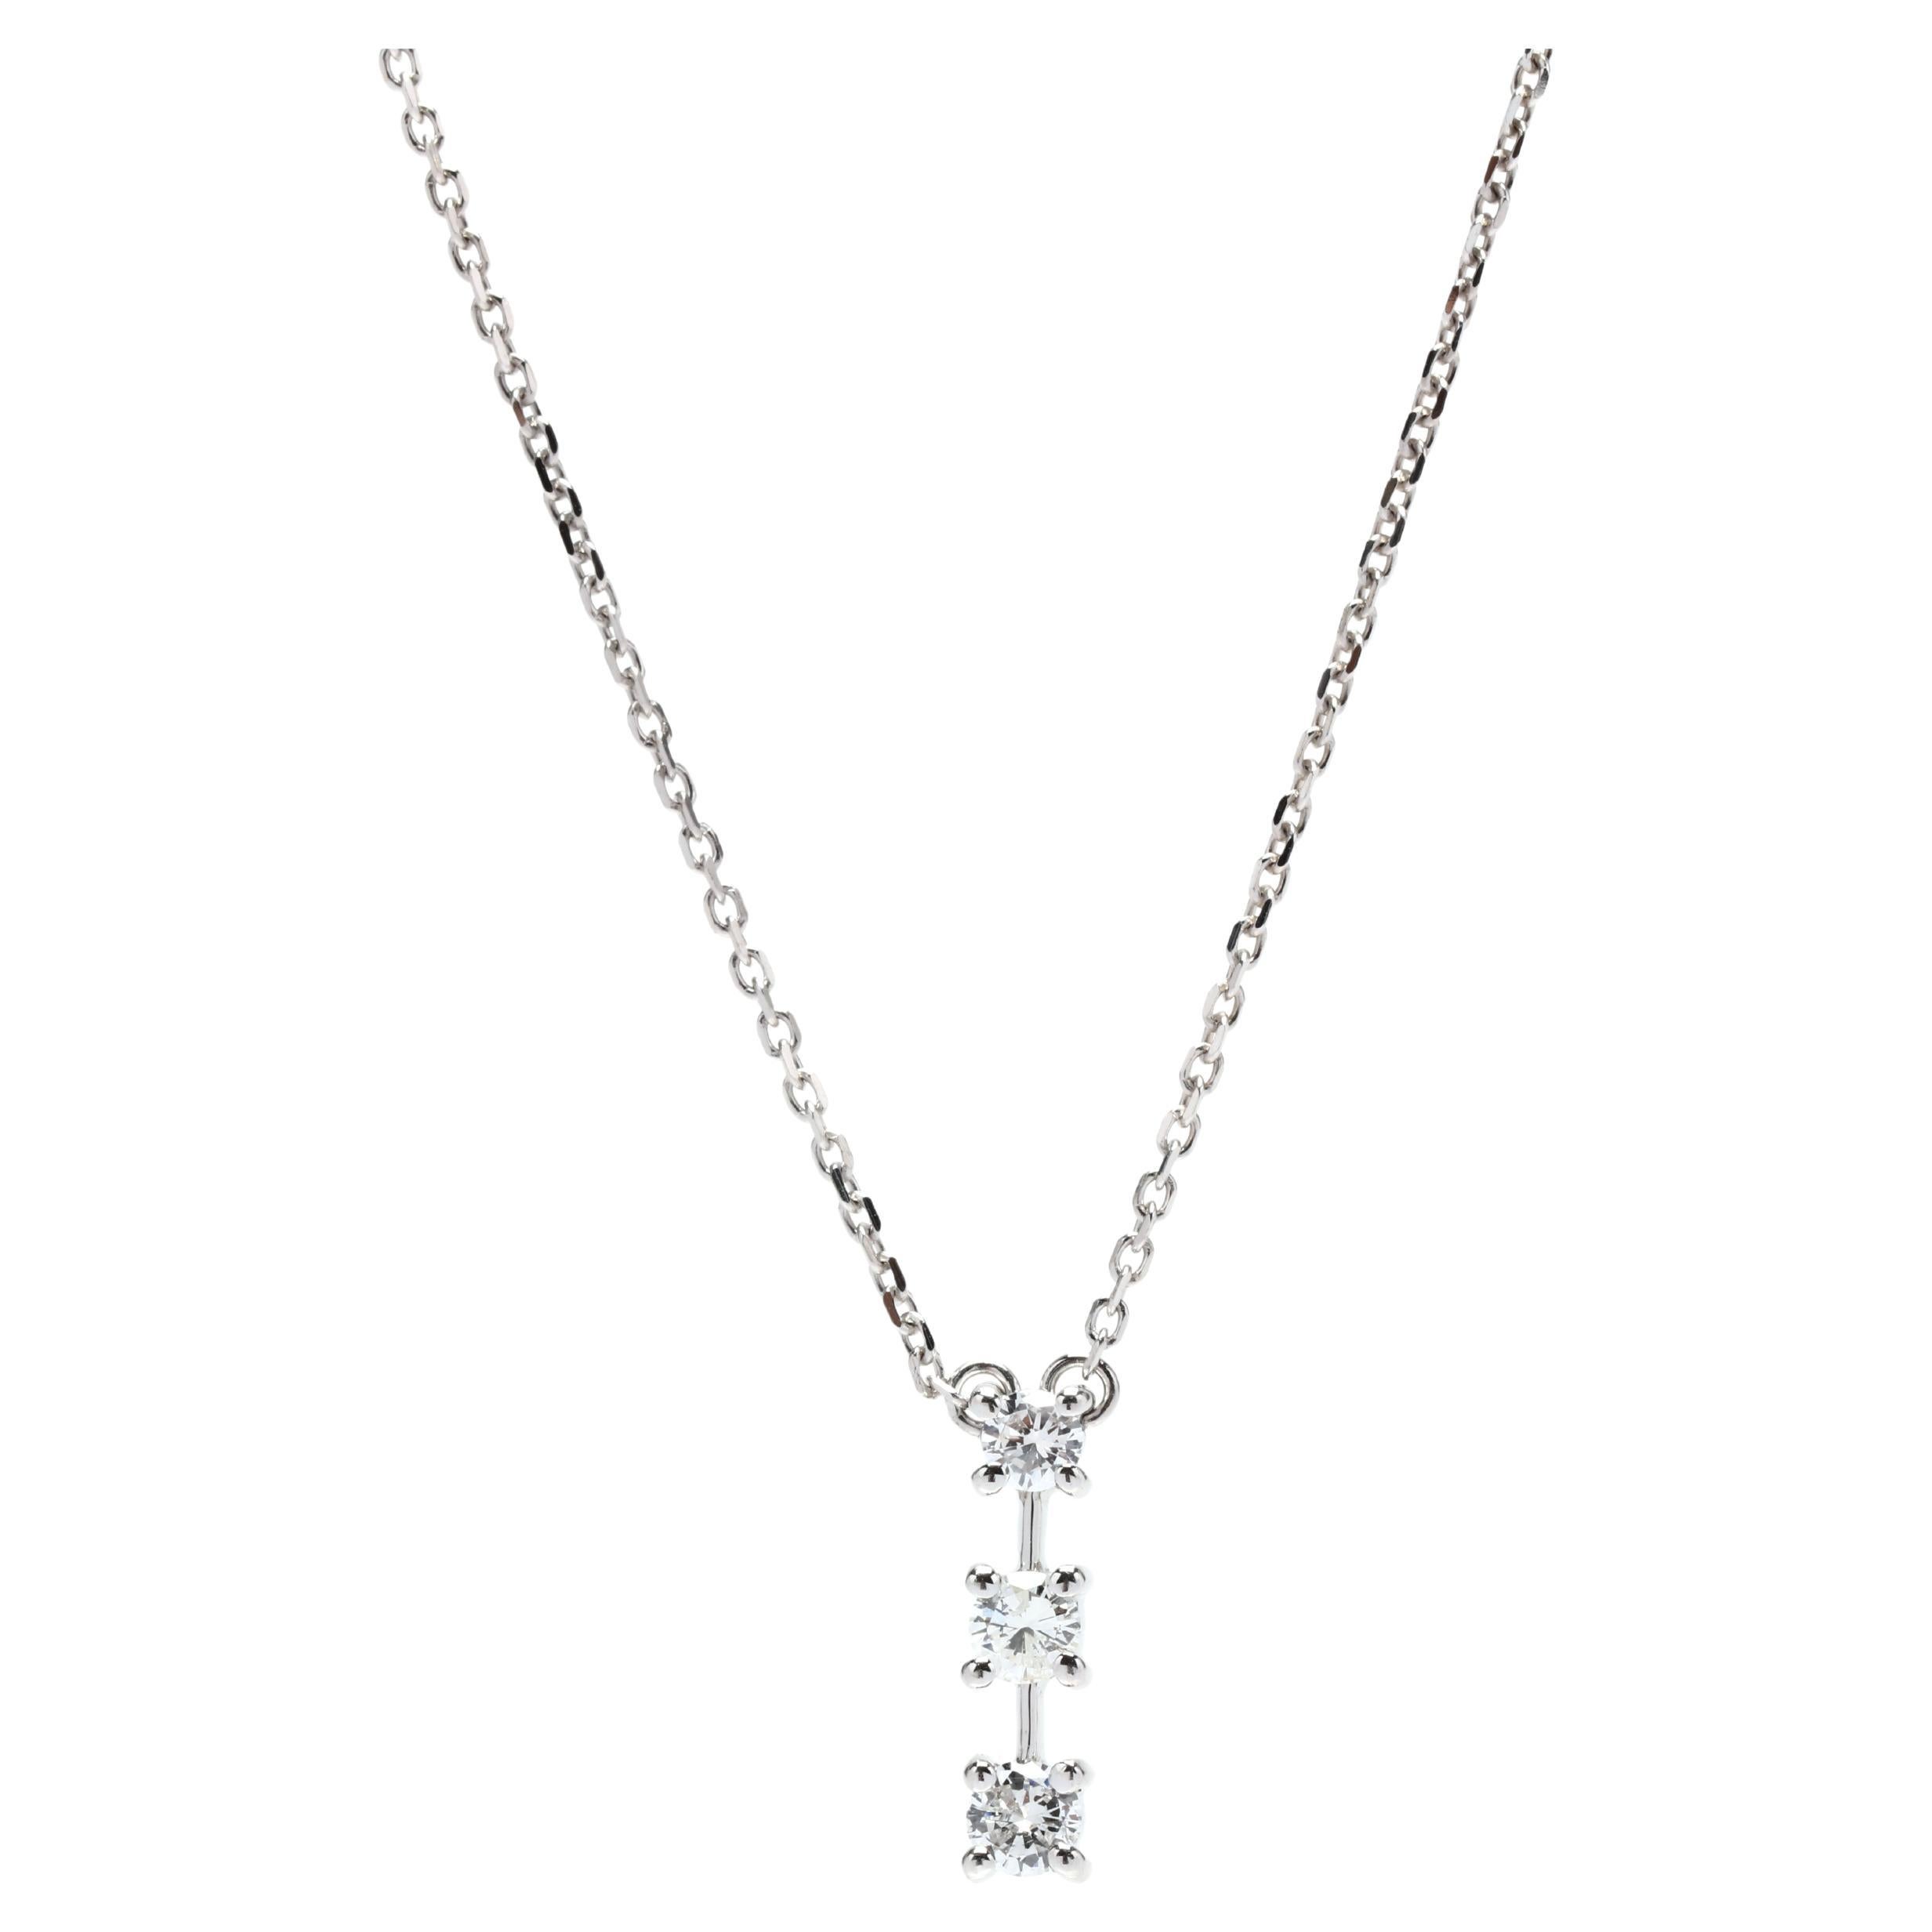 Linear Diamond Pendant Necklace, 14K White Gold, Length 16 Inch